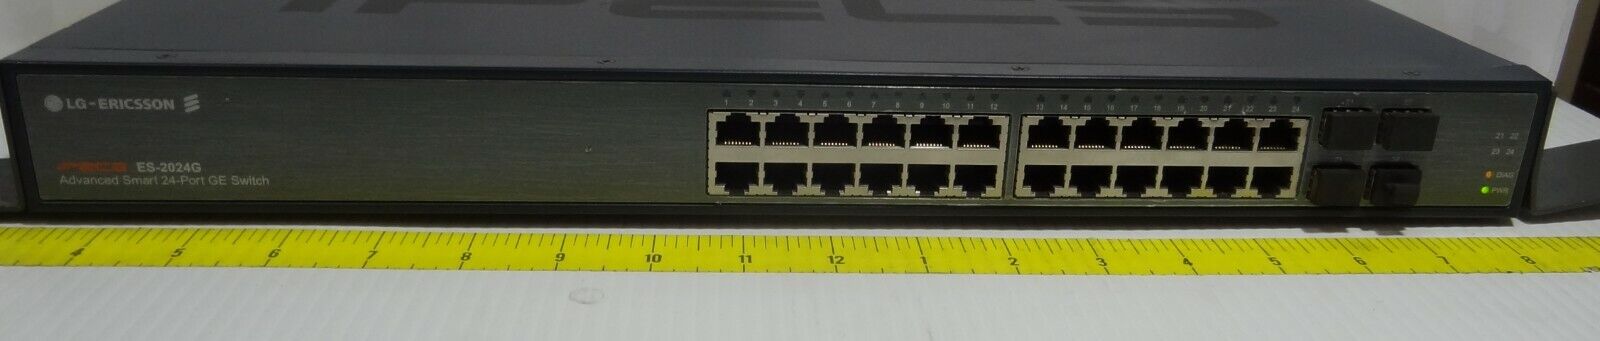 LG-Ericsson IPECS (ES-2024G) 24-Port Gigabit Ethernet Switch - Managed - 4x SFP